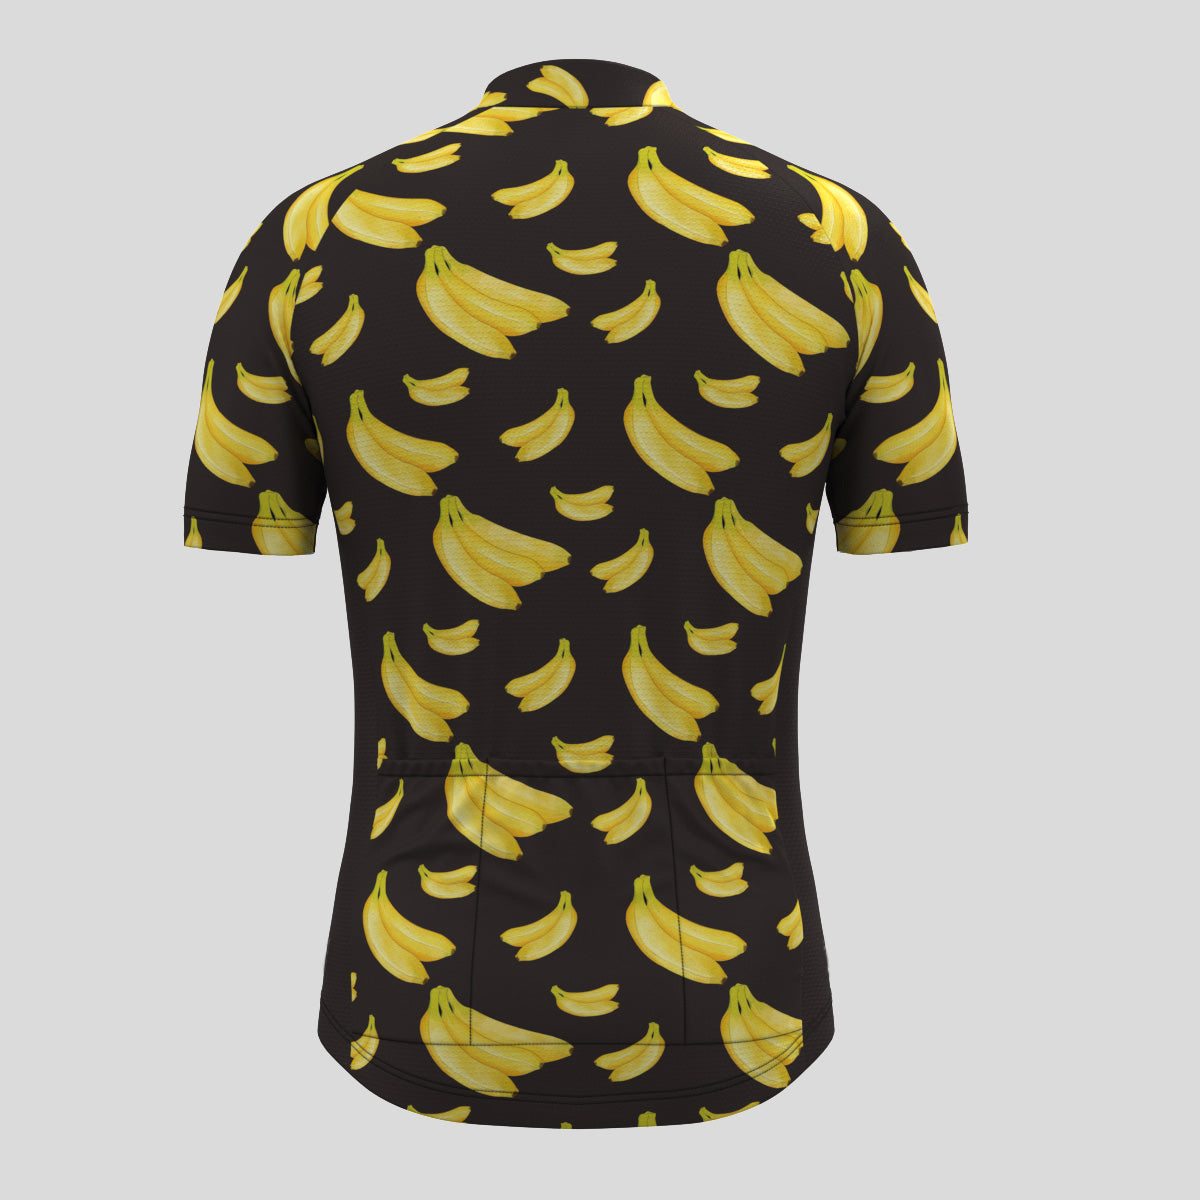 Undress Me Banana Men's Cycling Jersey | Sanpella.cc